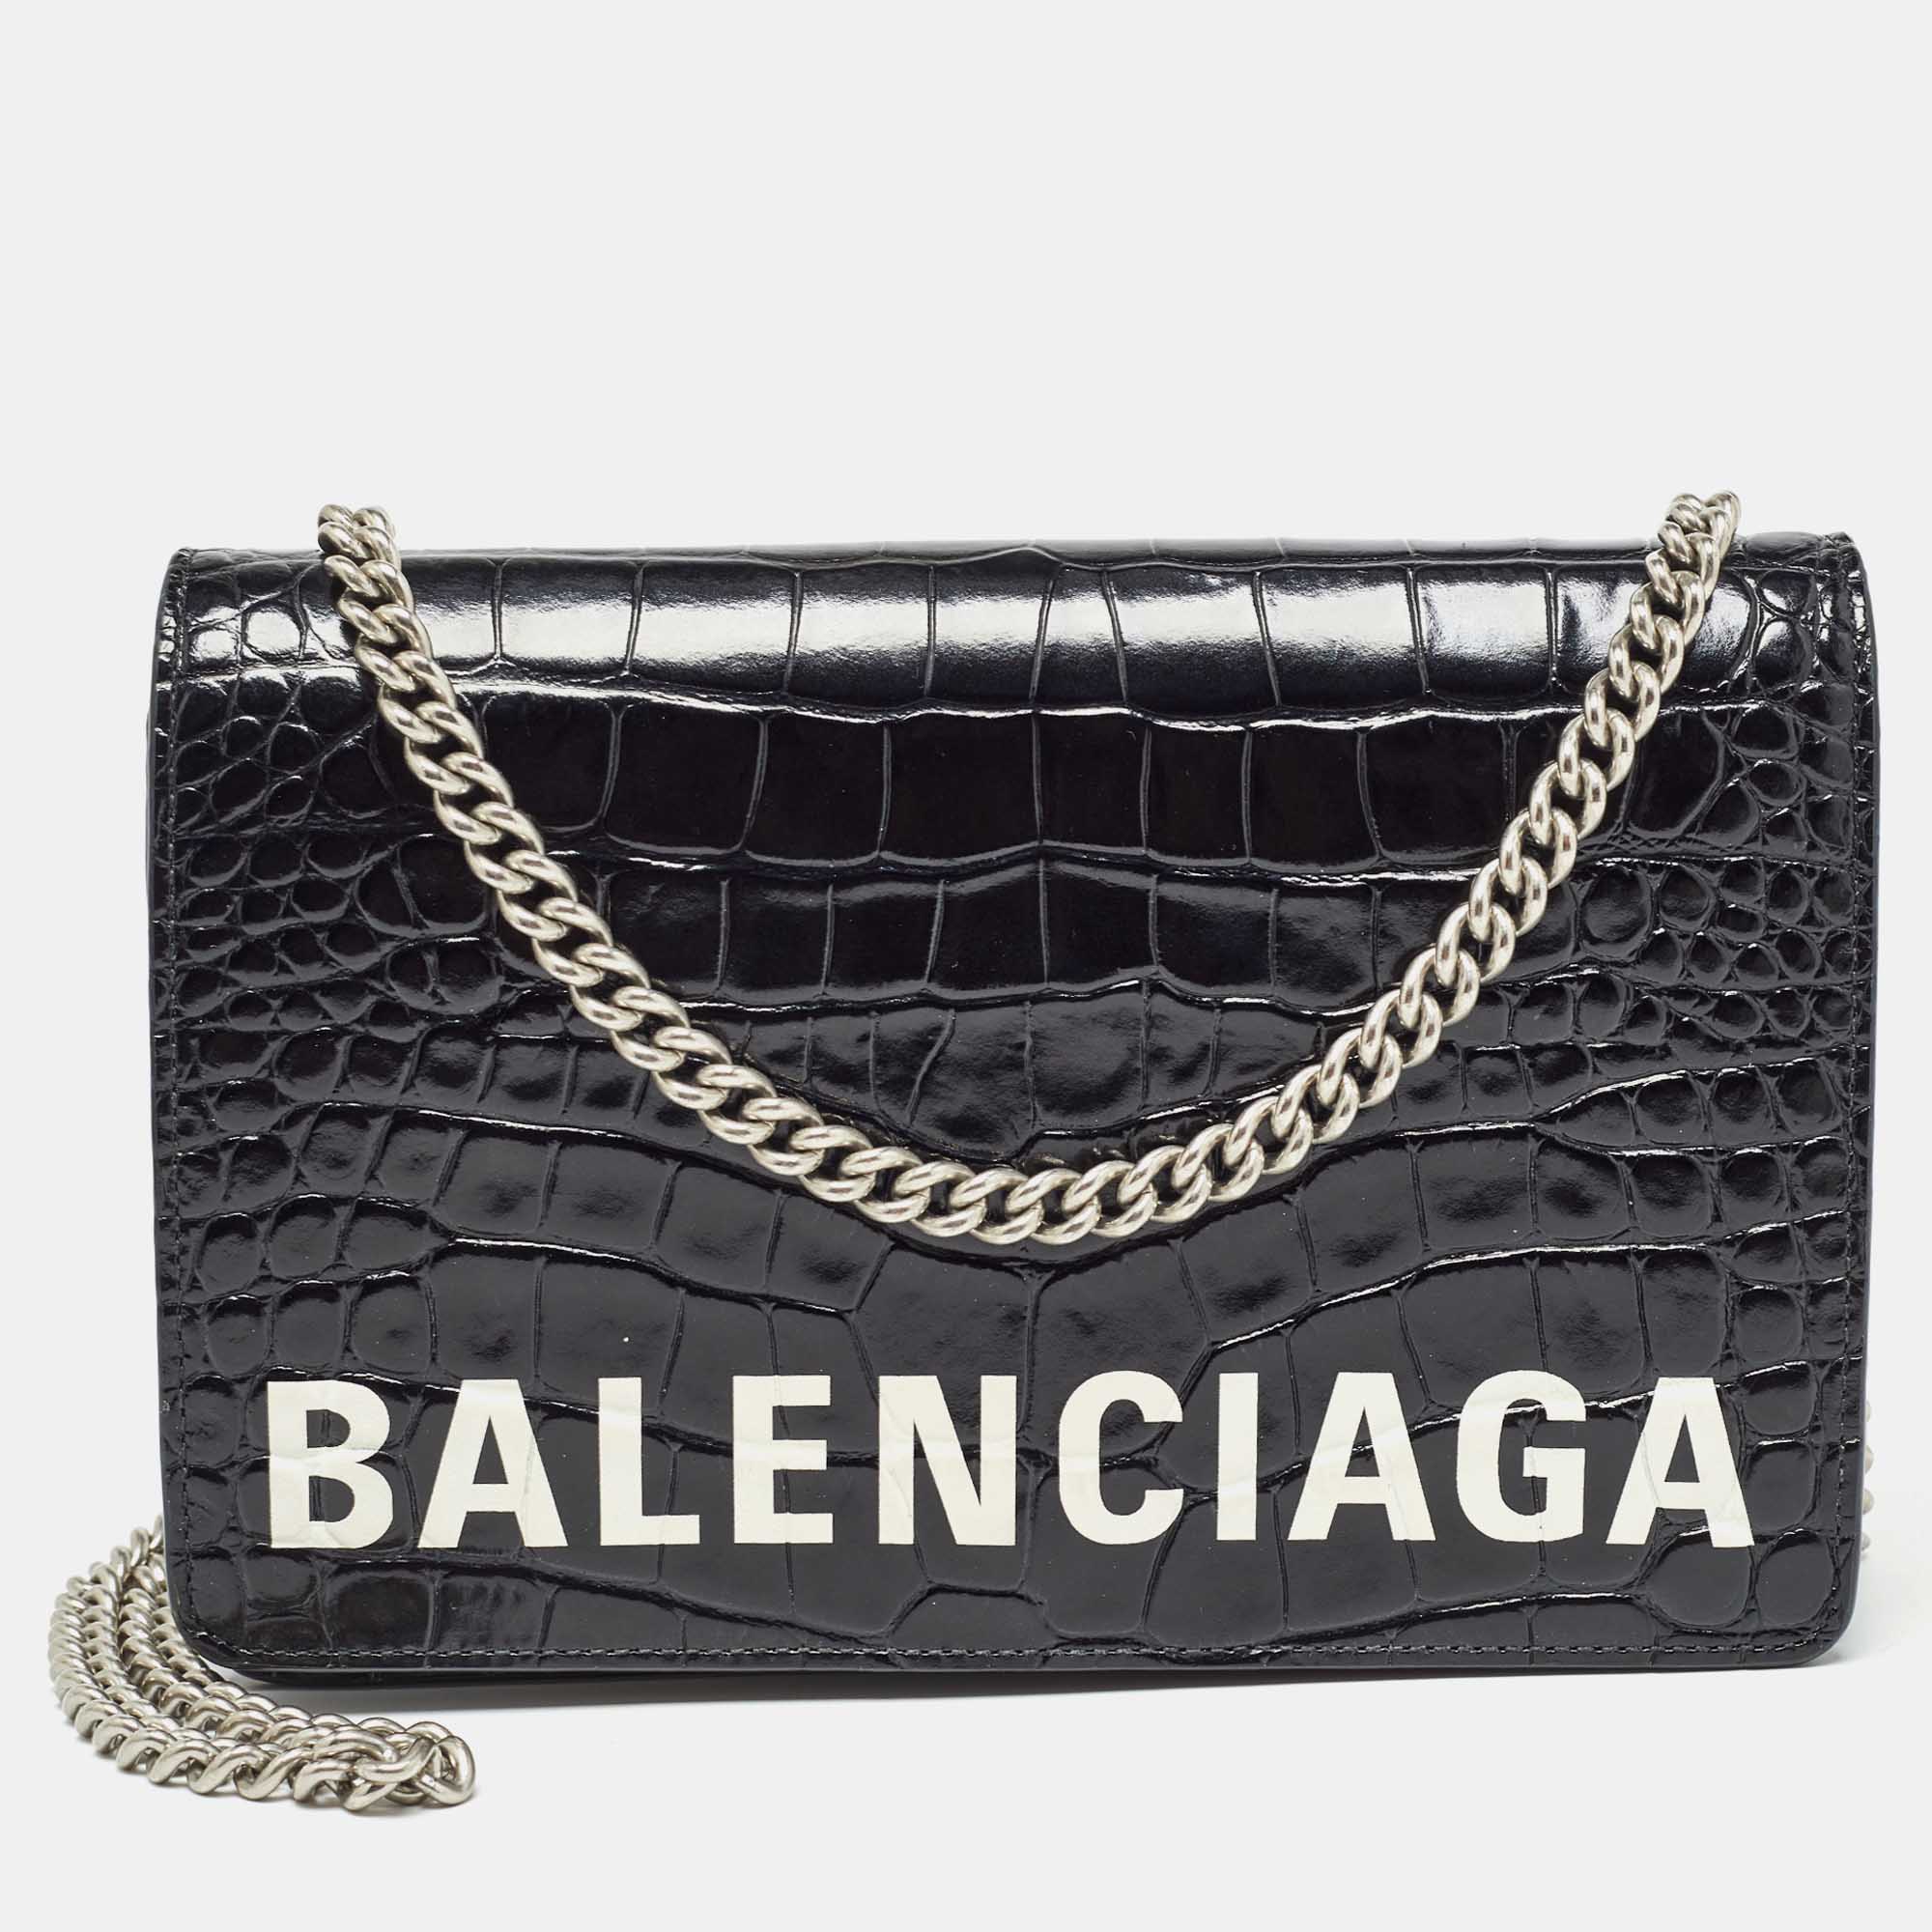 

Balenciaga Black Croc Embossed Leather Ville Chain Clutch